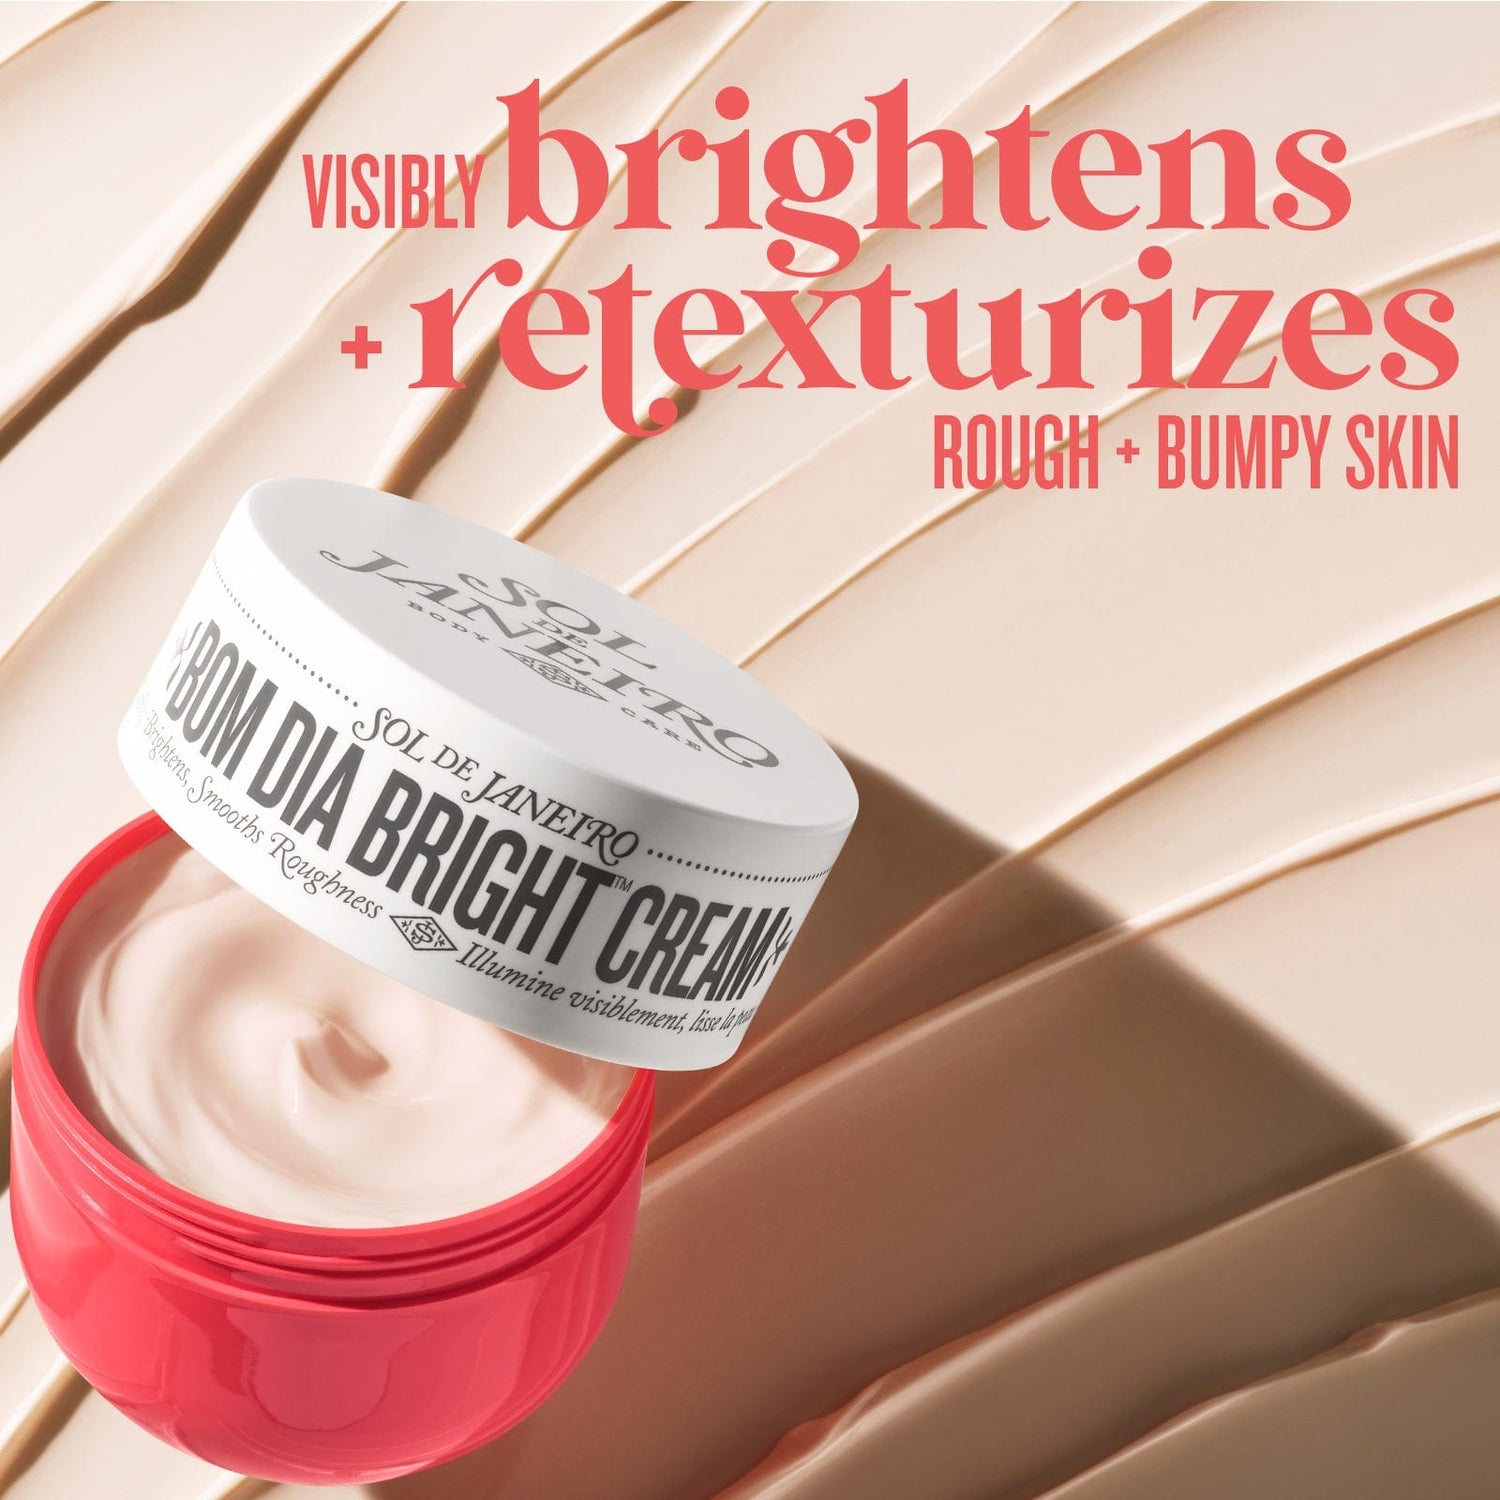 Bom Dia Bright™ Body Cream